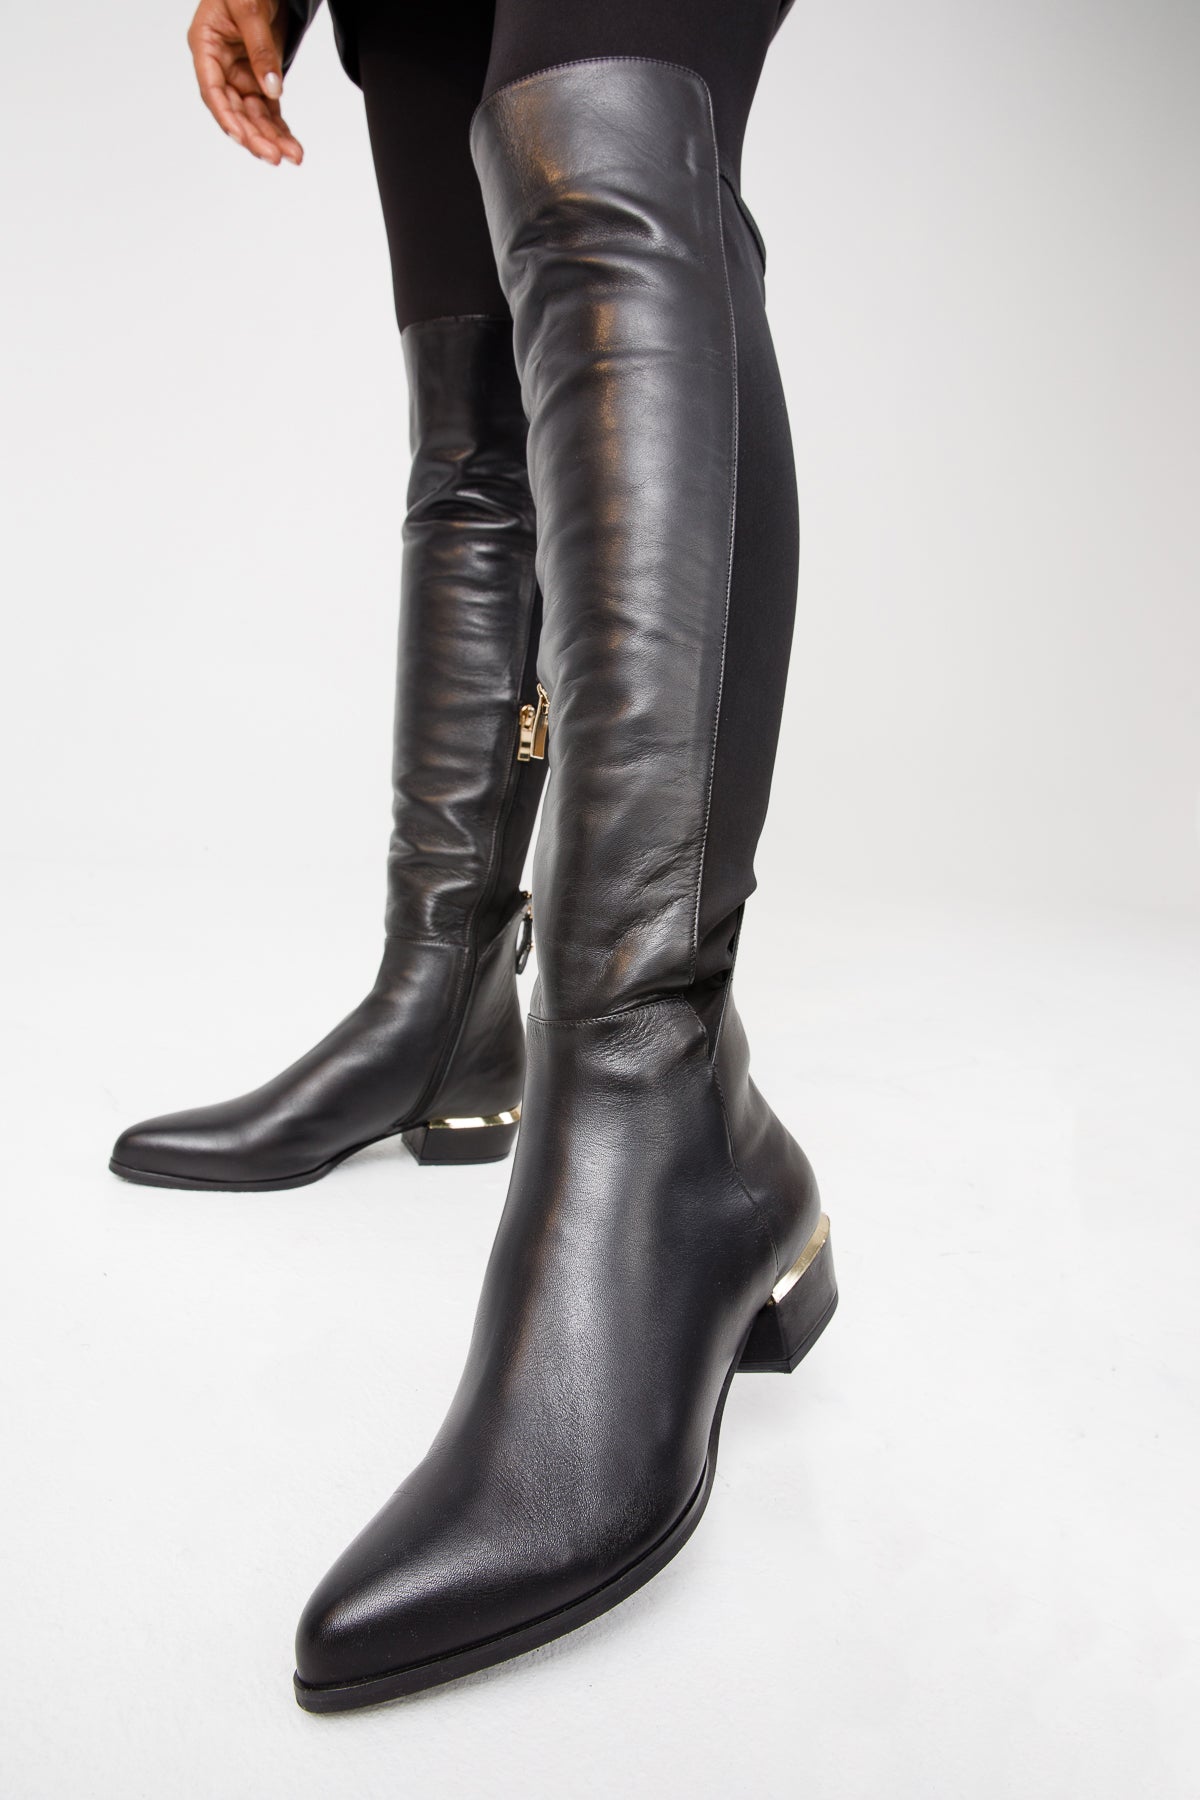 The Fairoks Black Leather Pointy Toe Knee High Women Boot